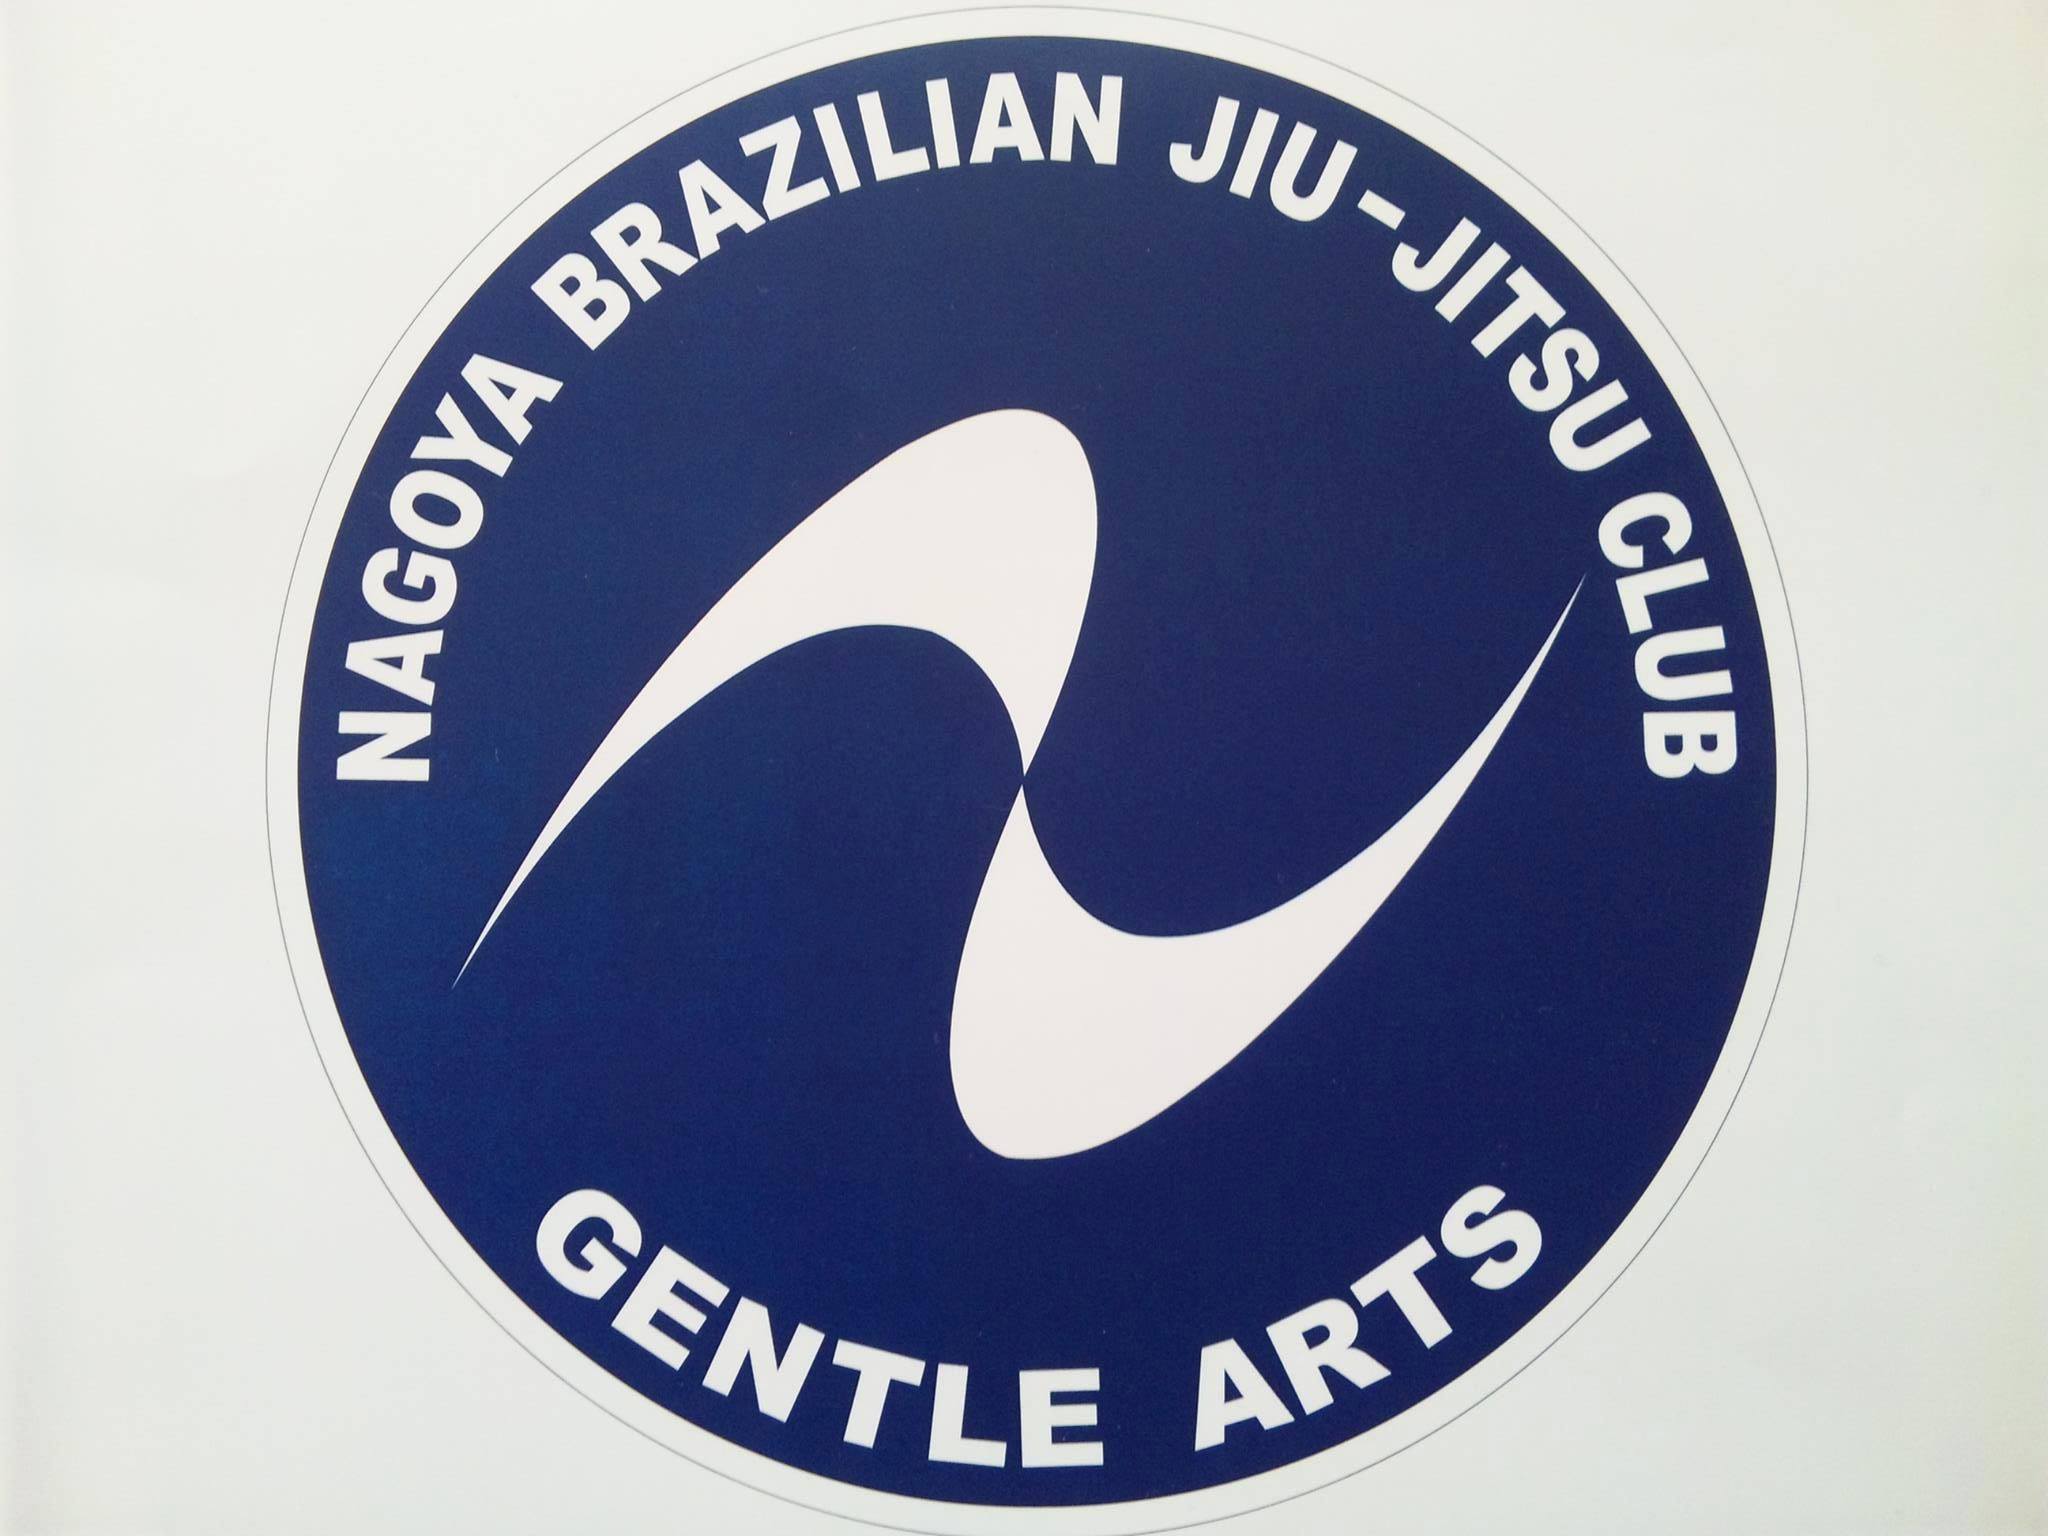 Gentle Arts Nagoya Brazilian Jiu-Jitsu